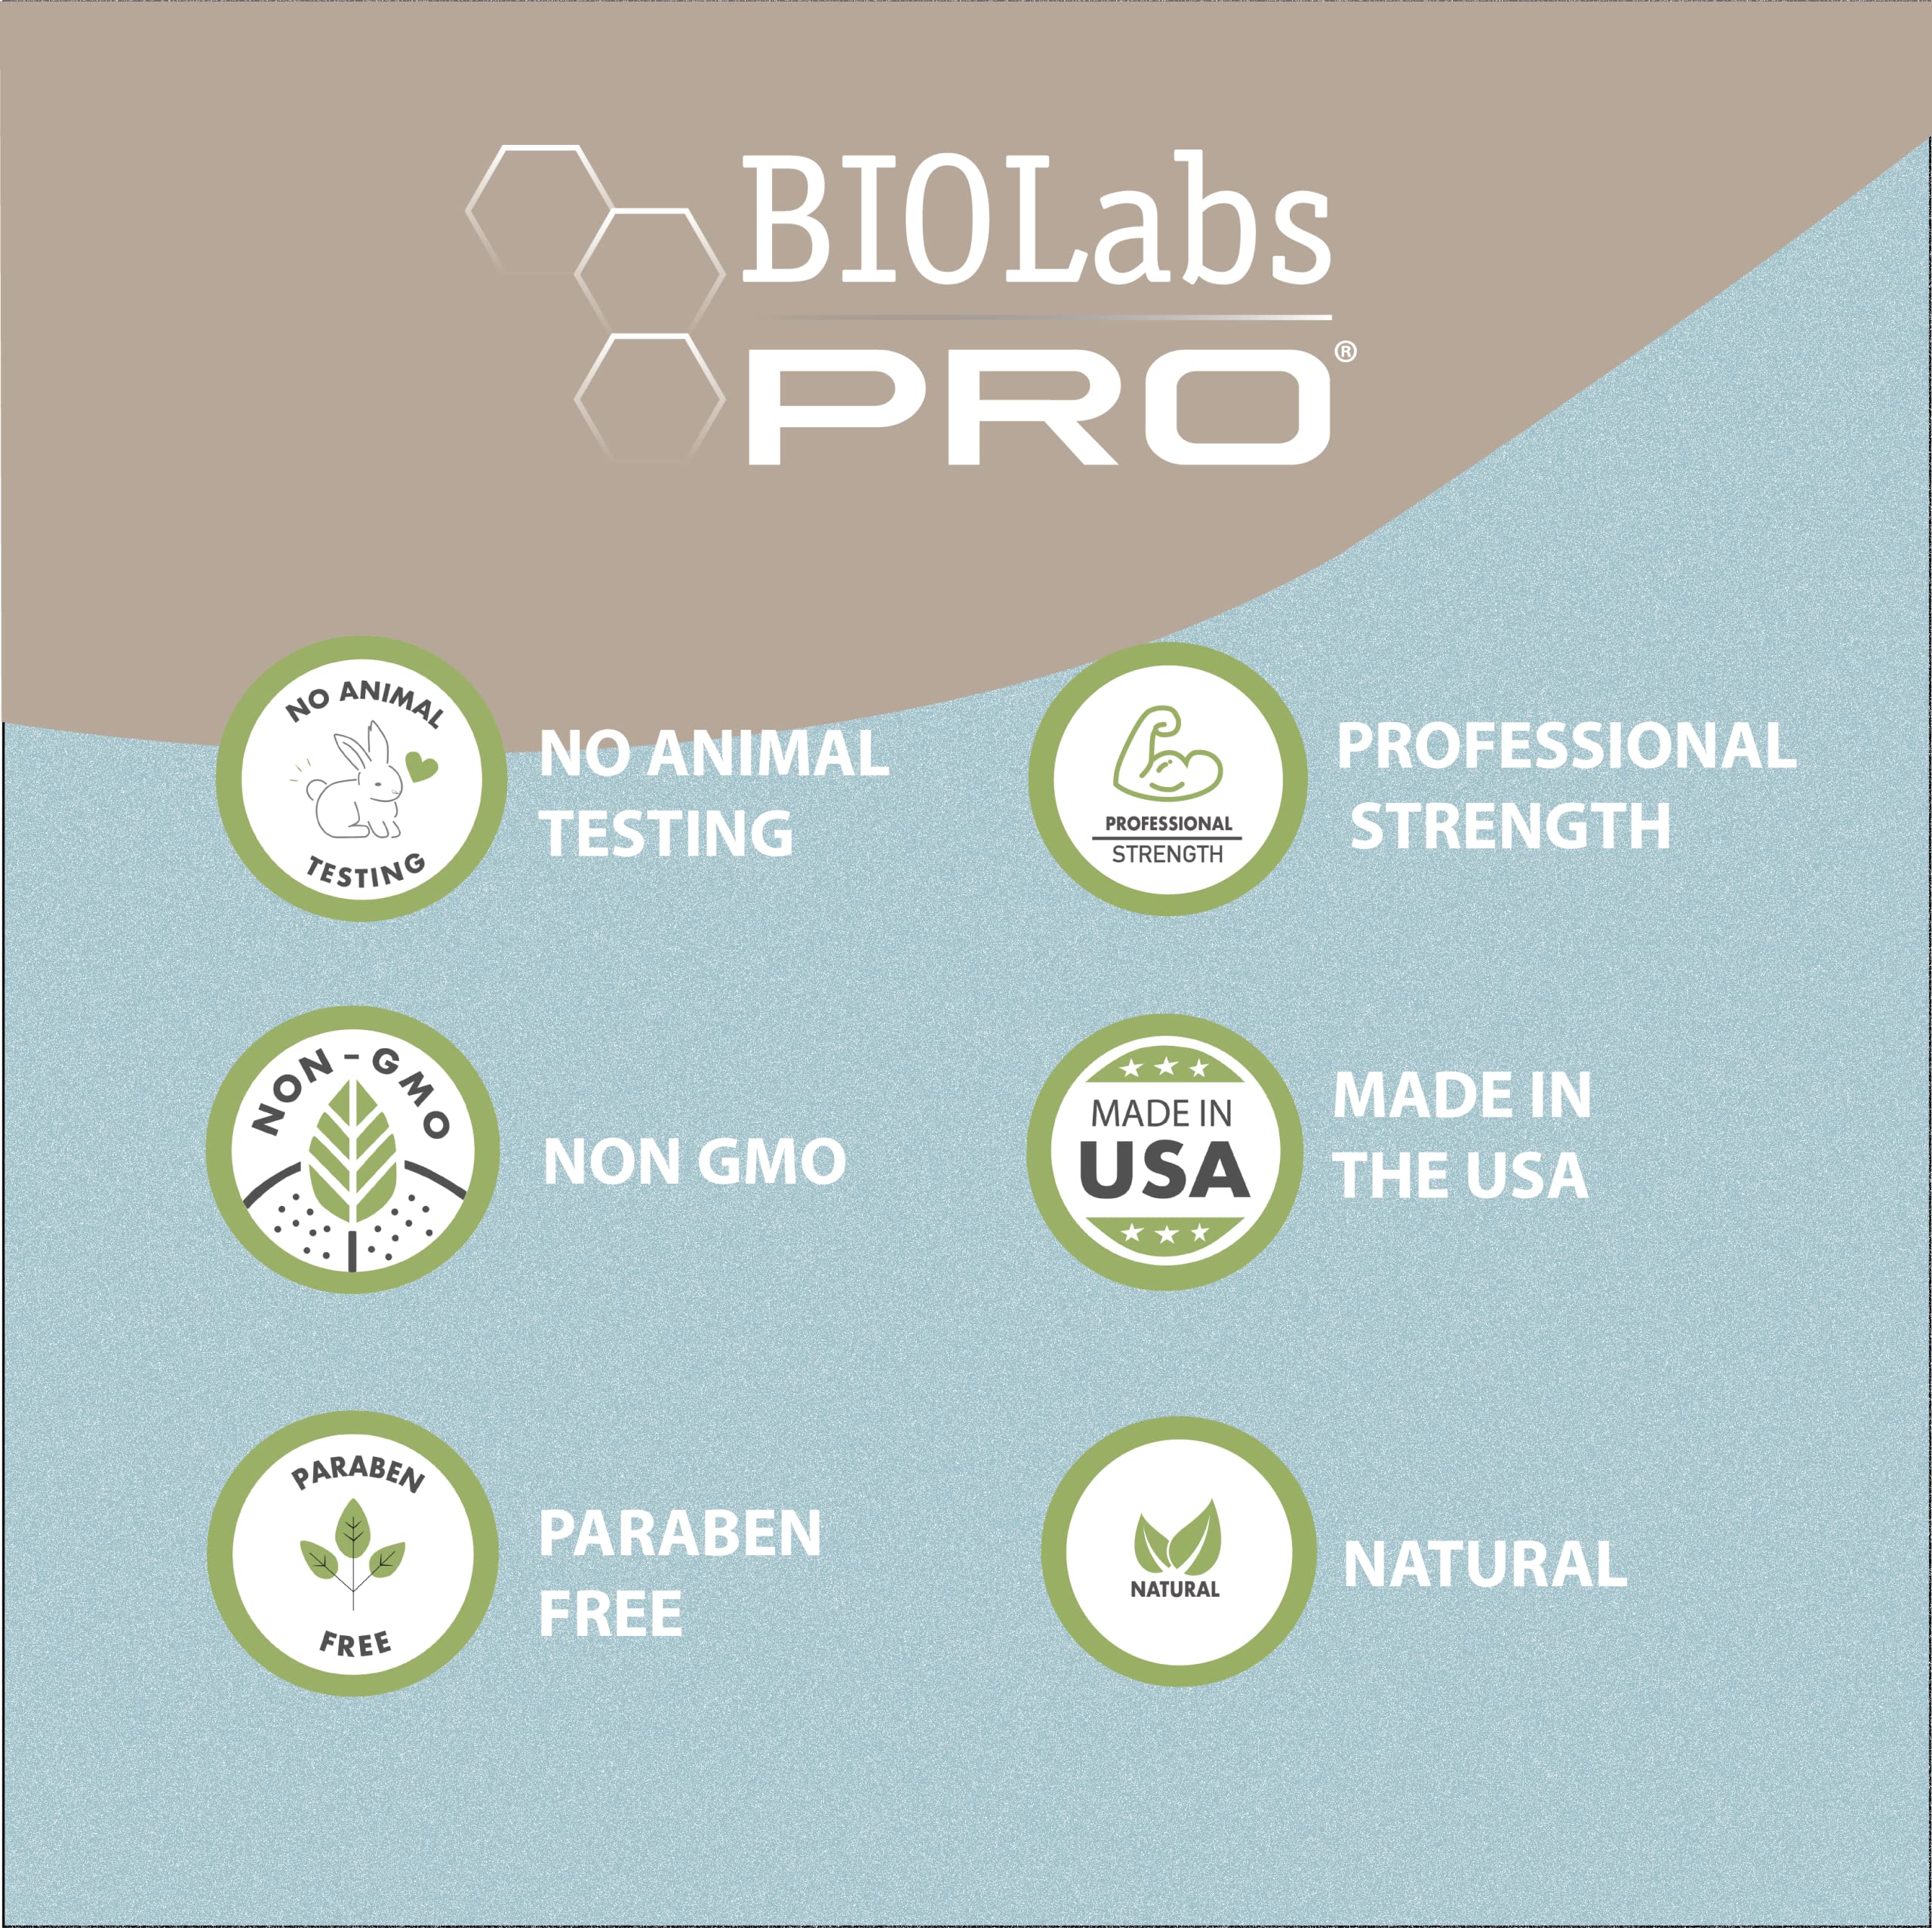 UltraSpa Skincare BioLabs PRO Natural Bioidentical Bi-EST 2.5 Cream For Women, Two Month Supply (3 oz - Lavender)